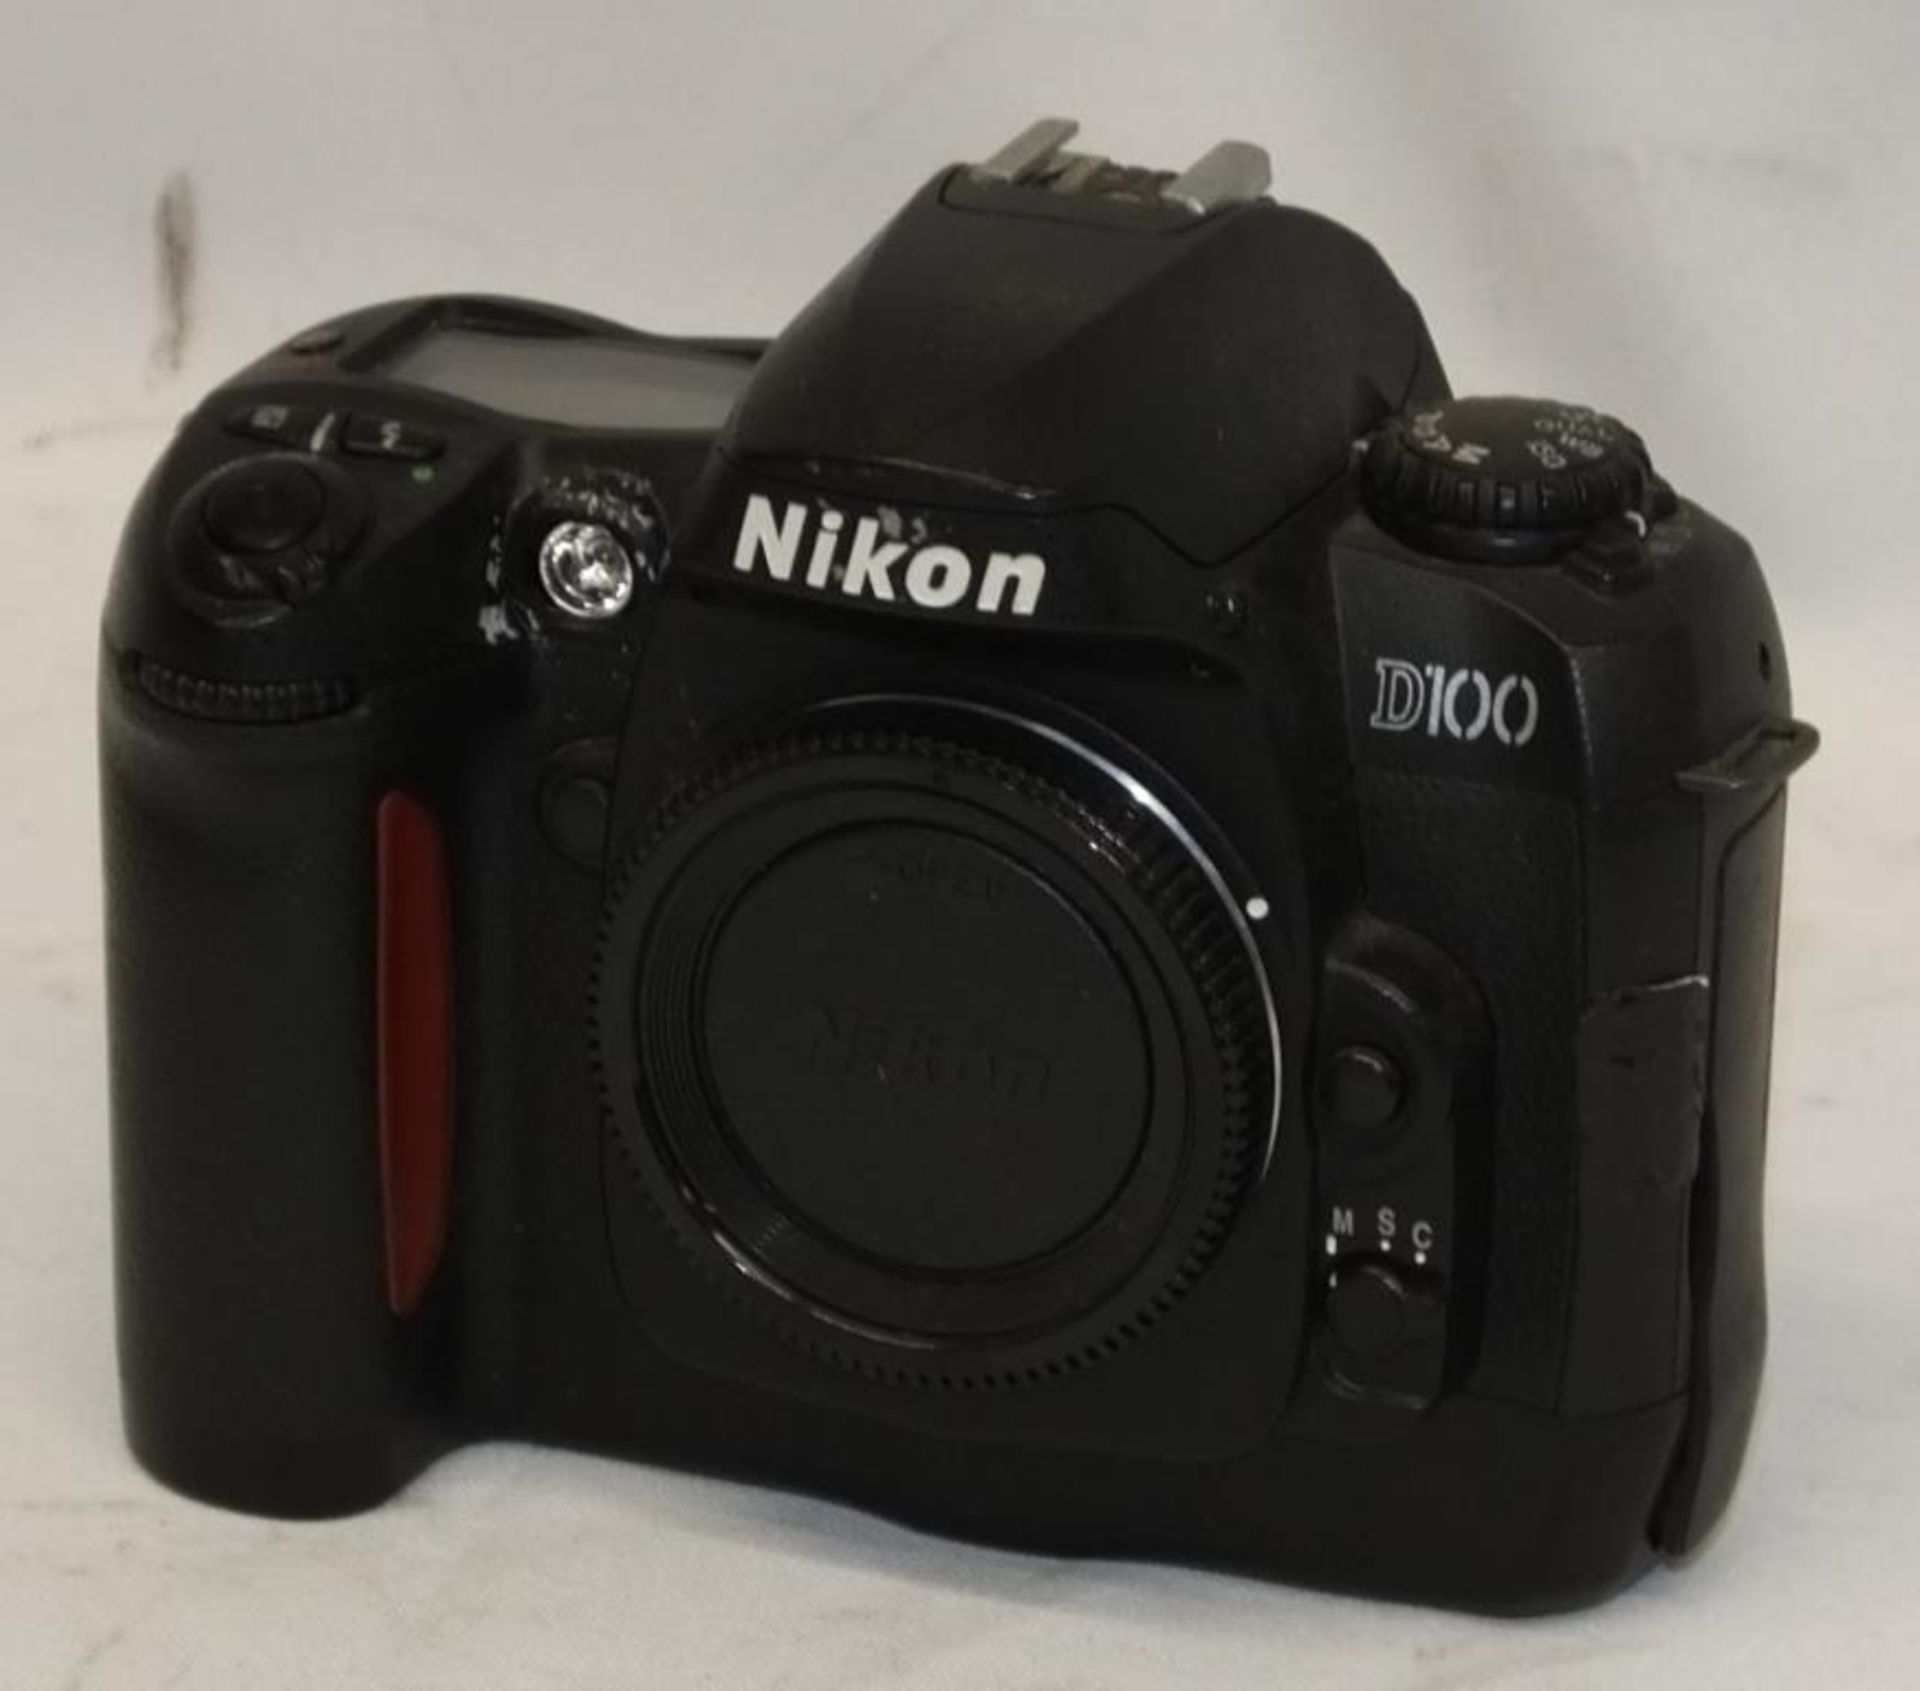 Nikon D100 camera body - serial 2268387 - no battery, no memory card - Image 2 of 4